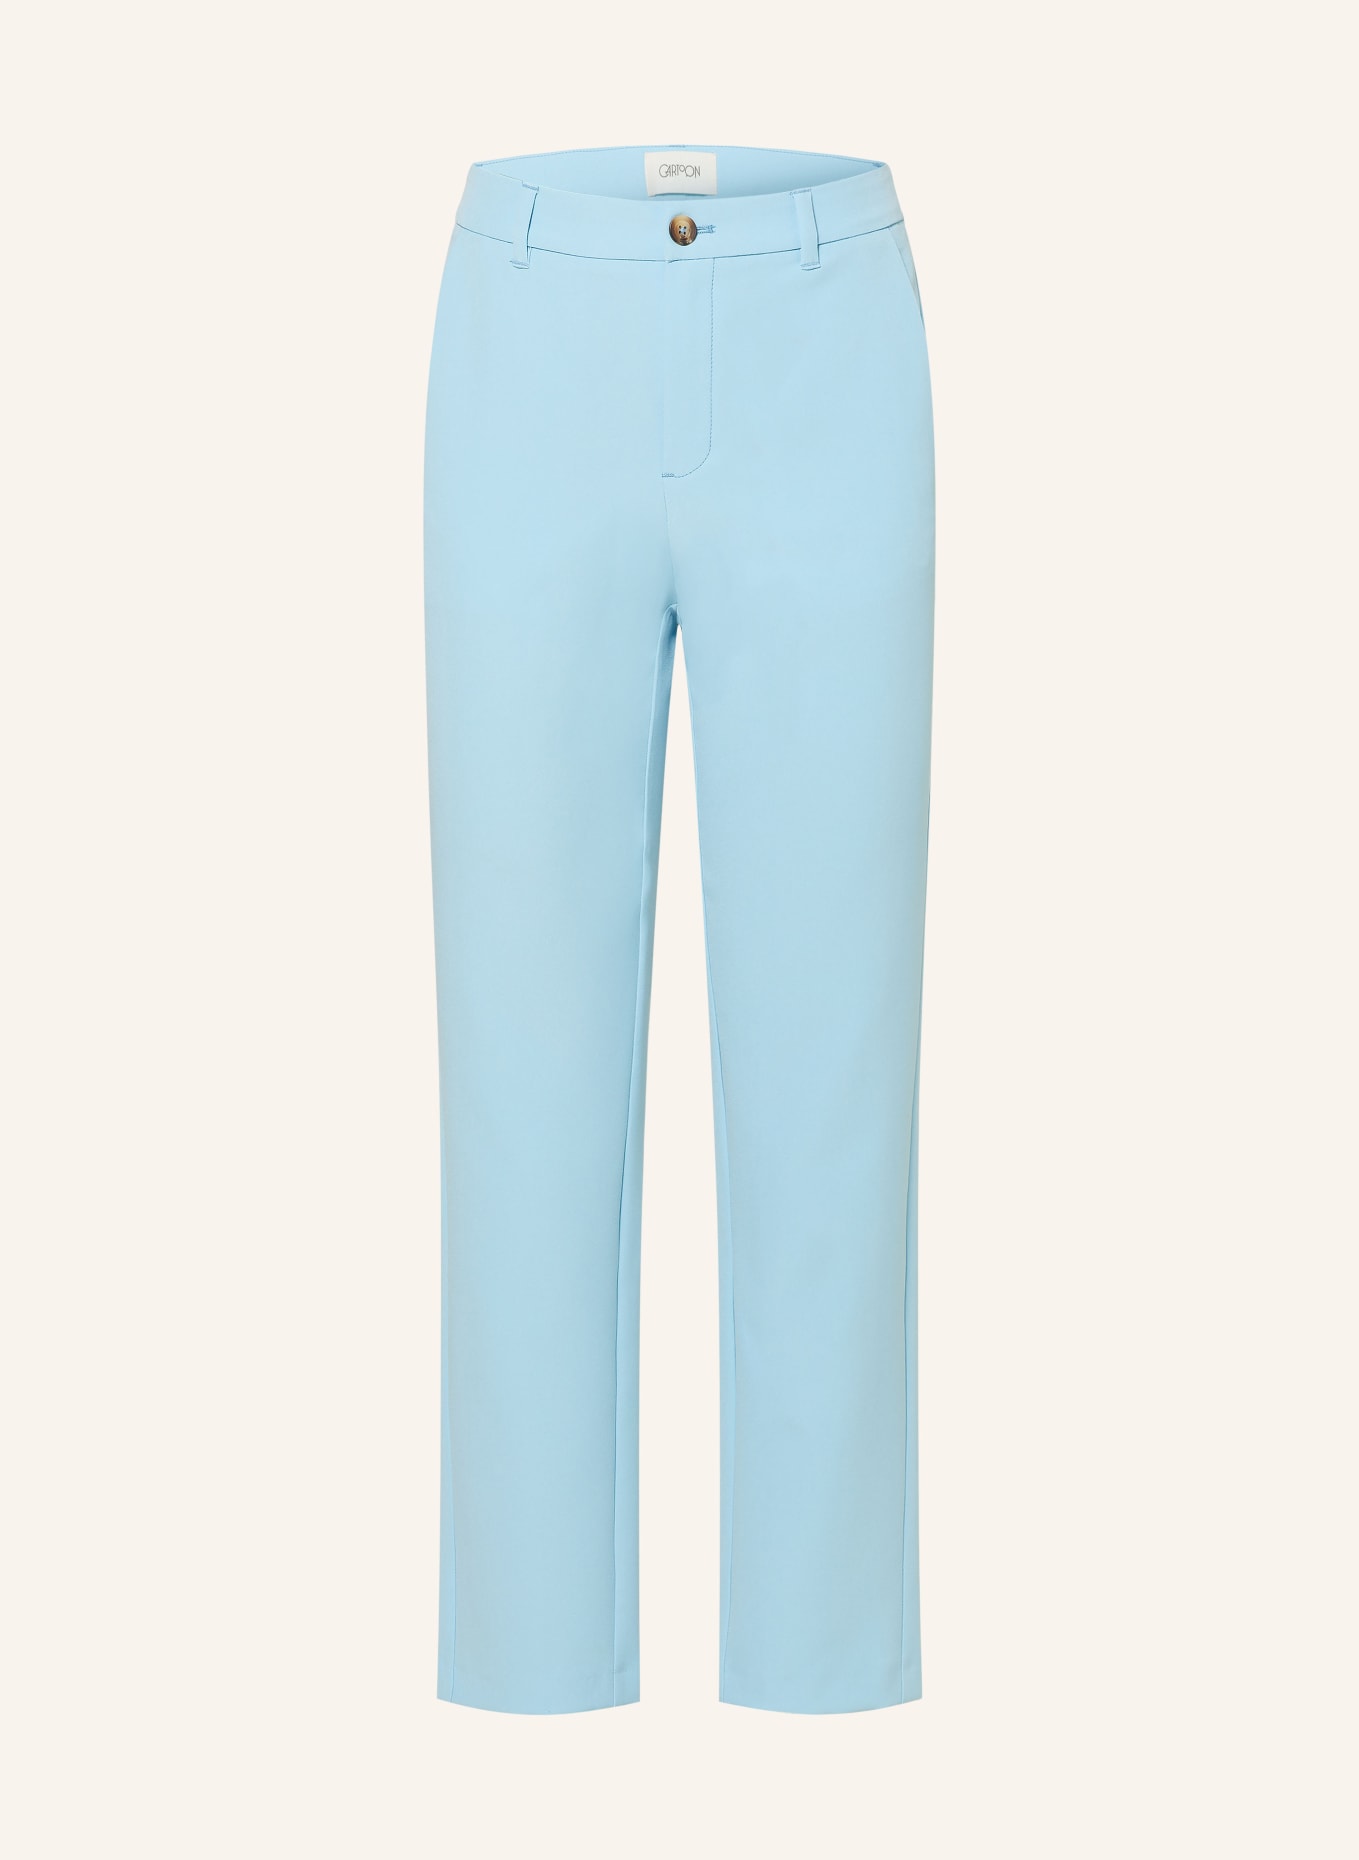 CARTOON Skinny Jeans, Farbe: 8087 Baltic Sea (Bild 1)